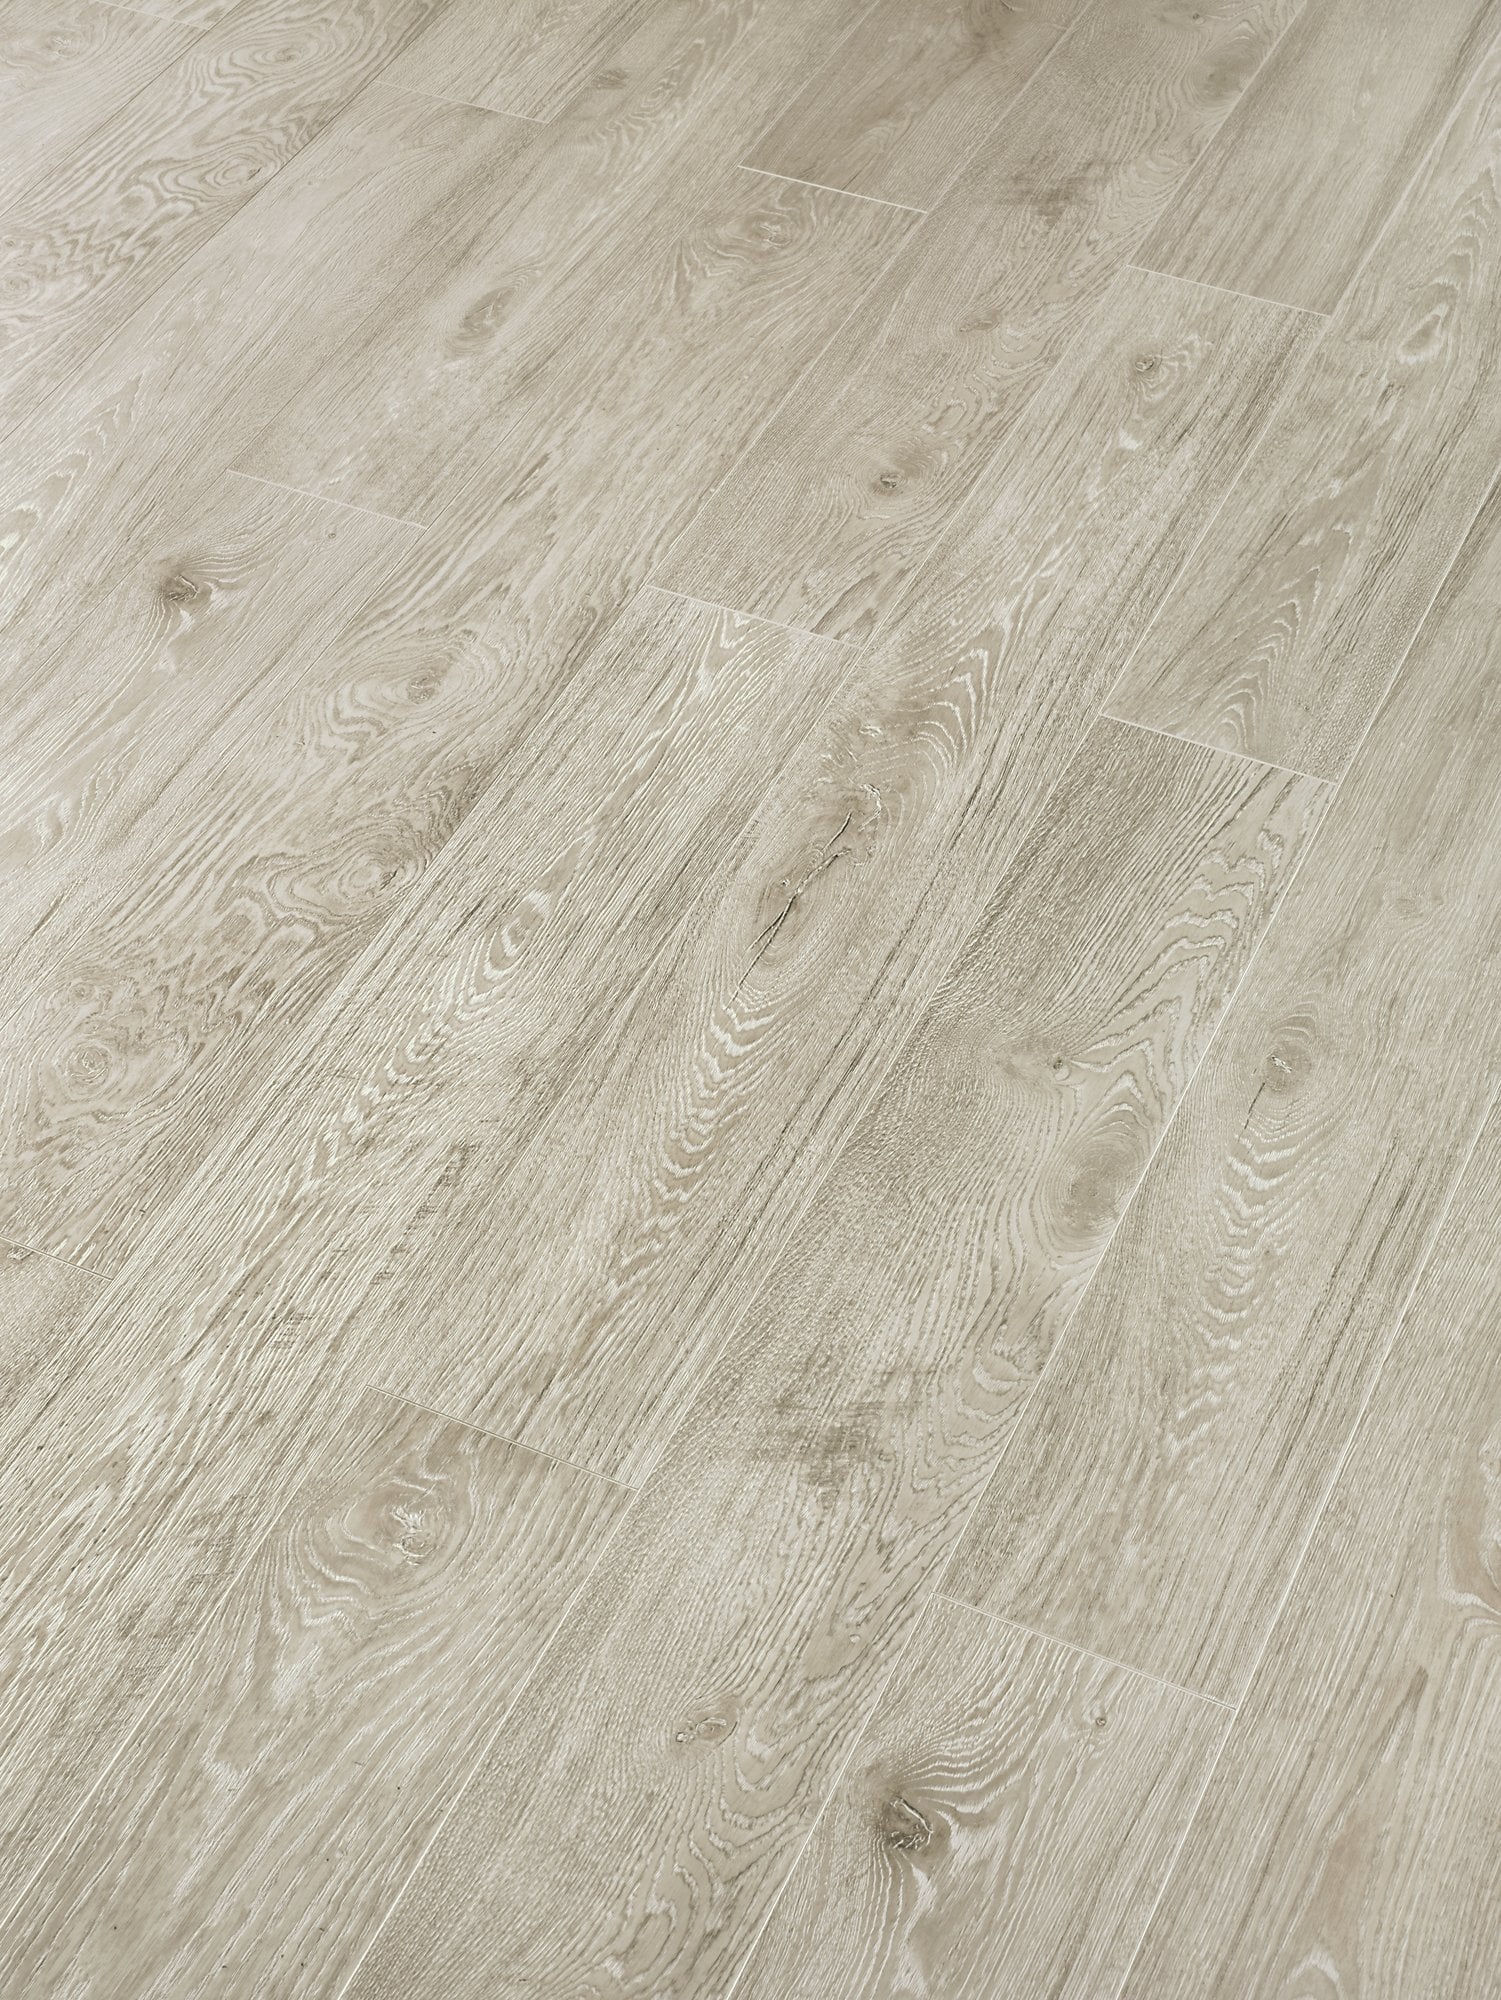 Laminate Oak Sand Hardwood Flooring, Swiss Krono Laminate Flooring